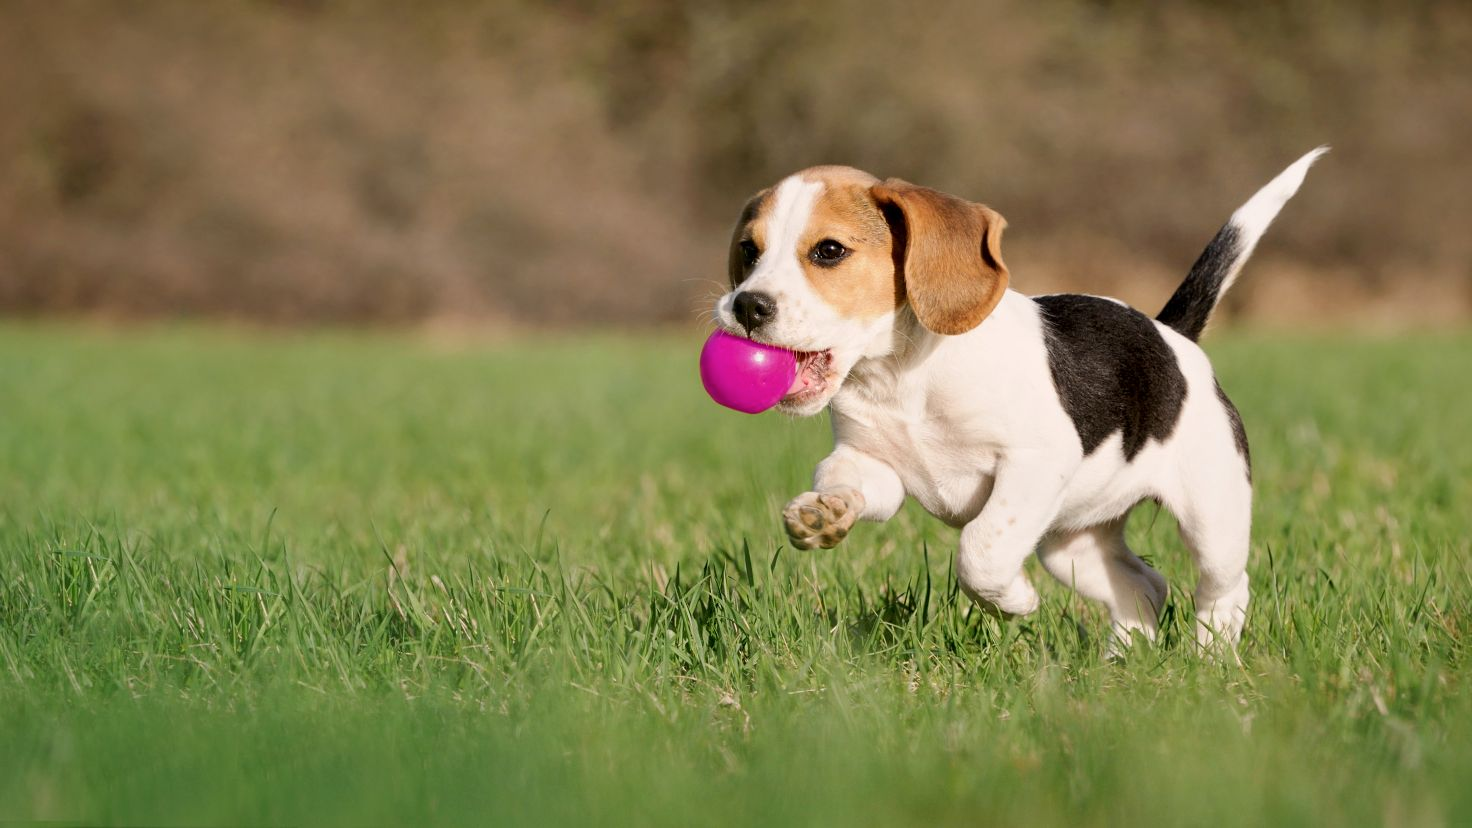 Beagle cachorro corriendo con una pelota rosa en la boca